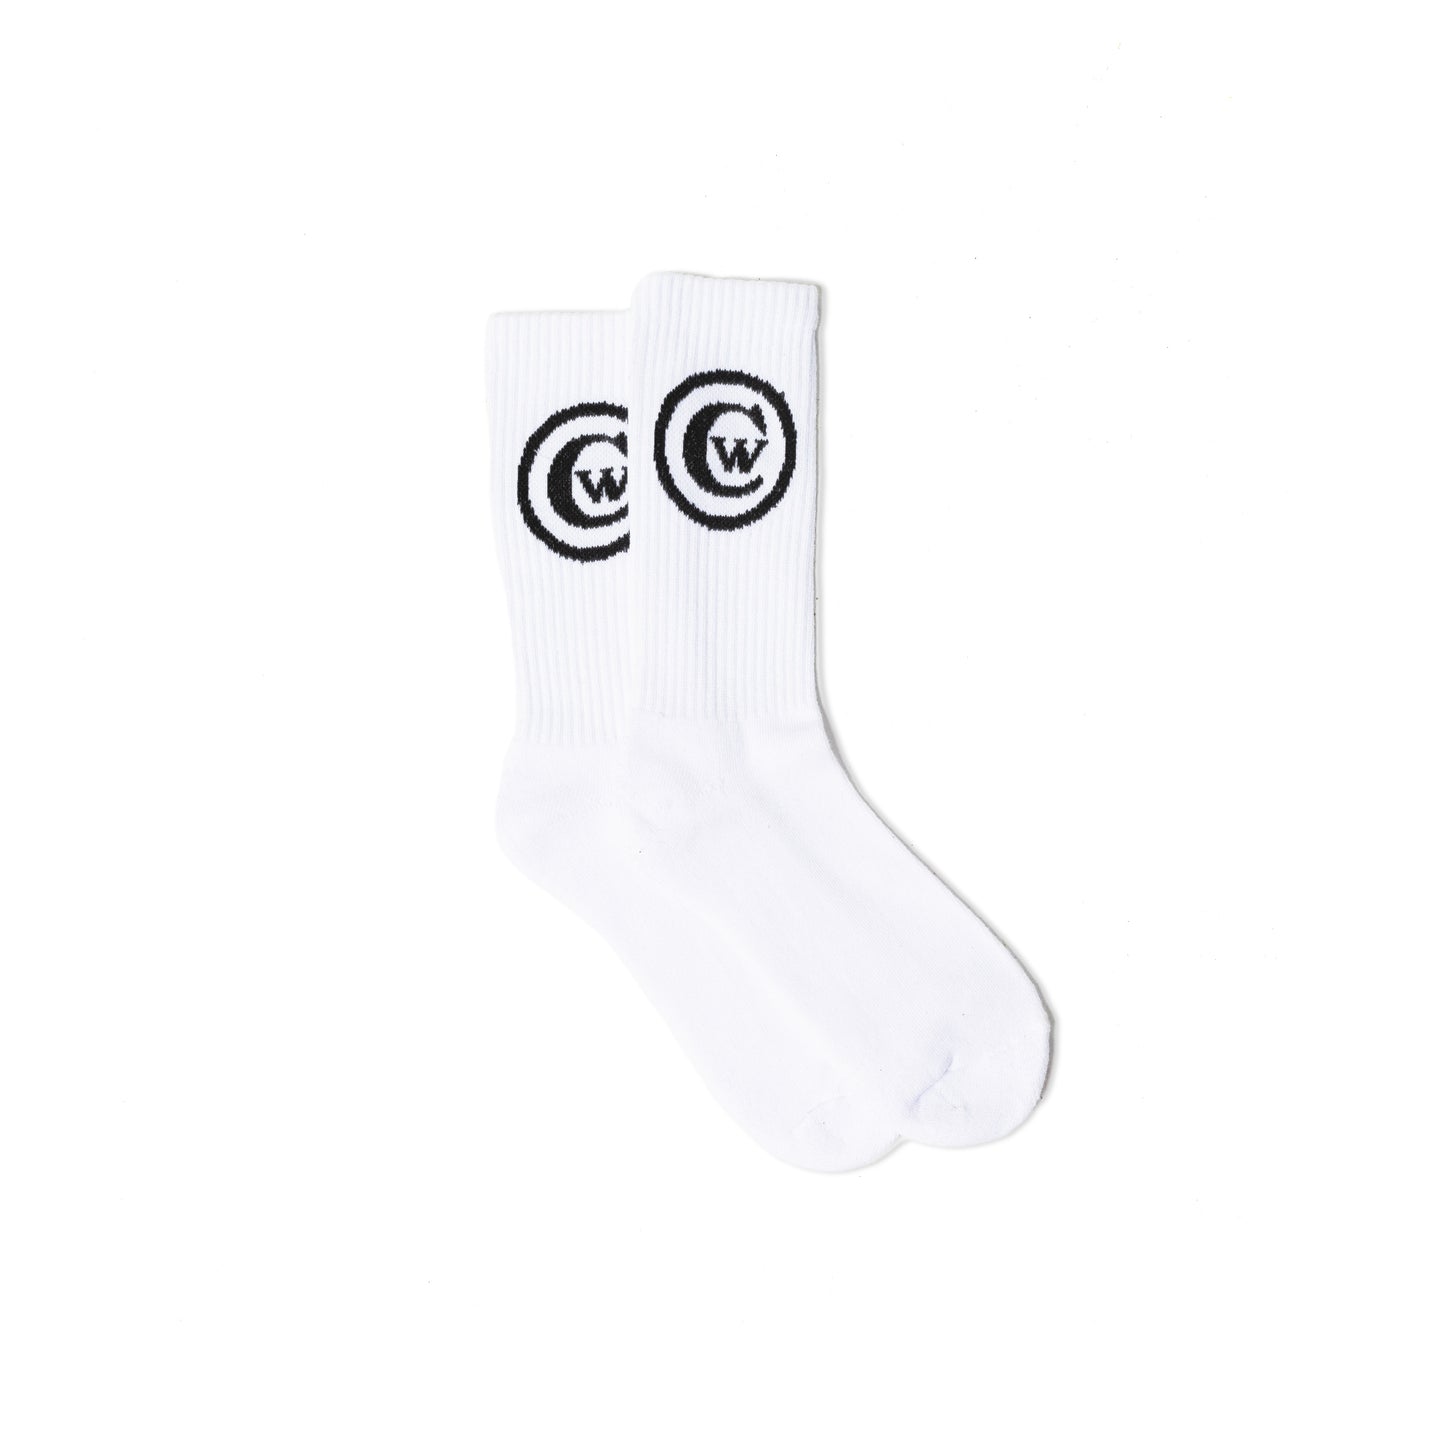 Cold Wave Logo Sock White